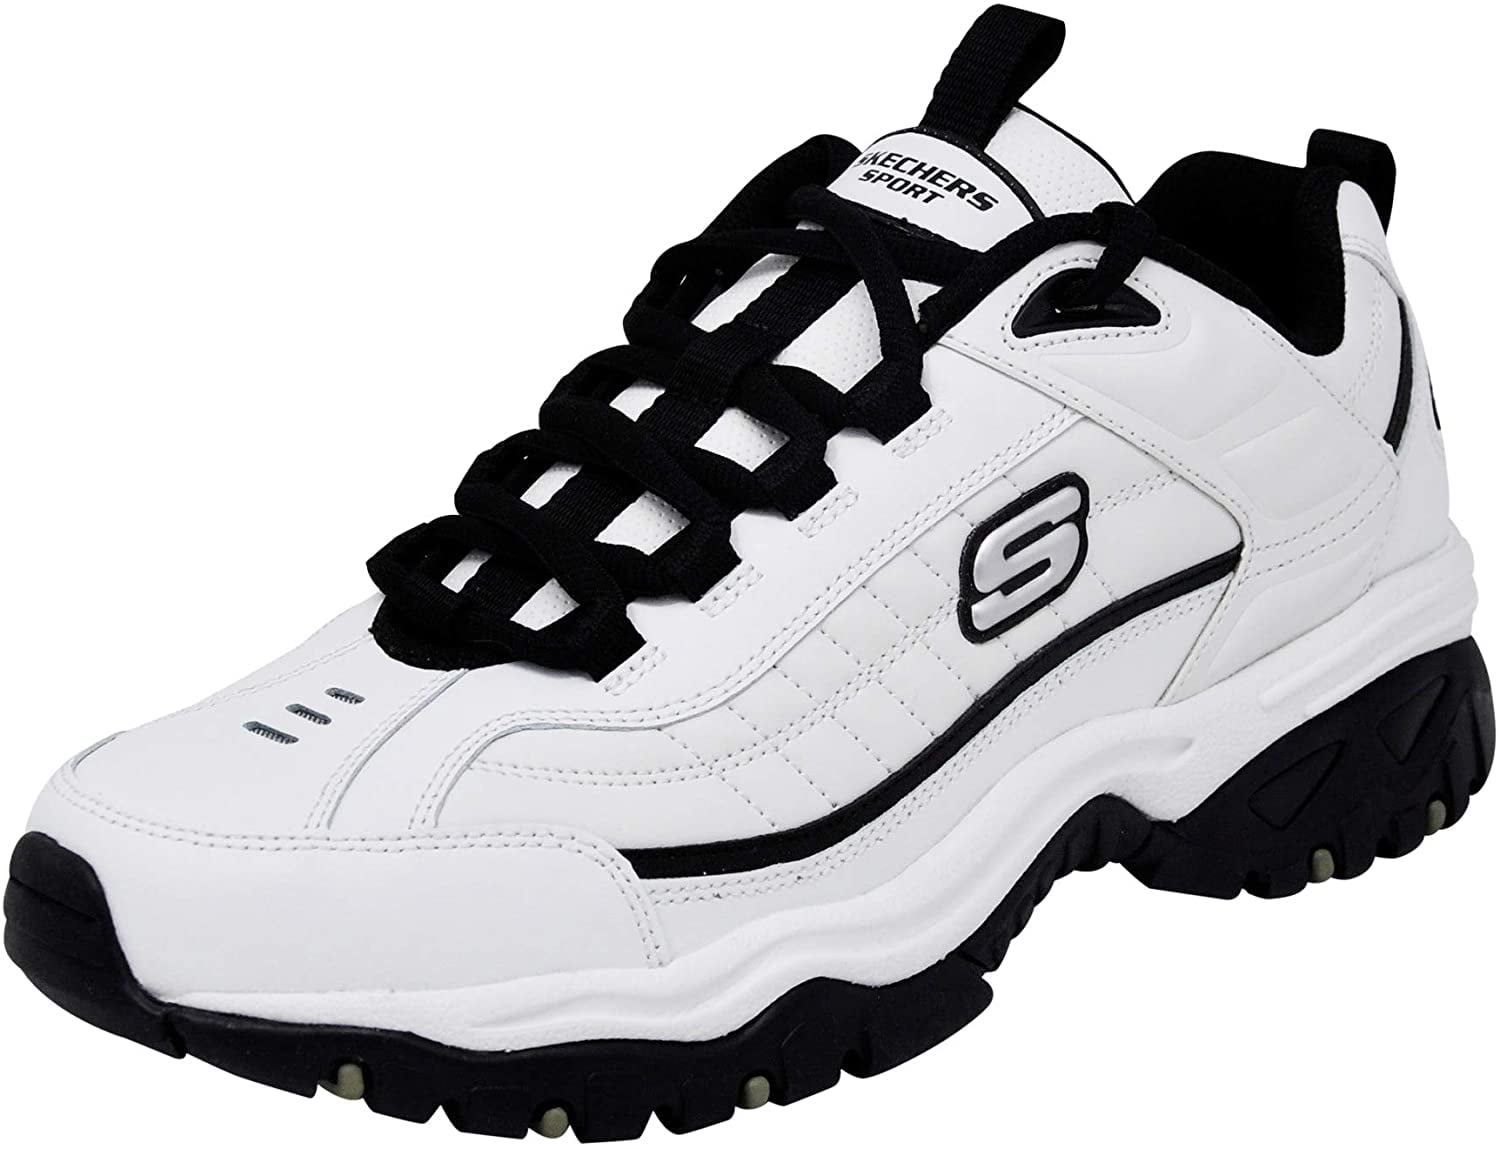 Skechers Energy Afterburn Lace-Up Sneaker, White/Black, 10.5 US - Walmart.com